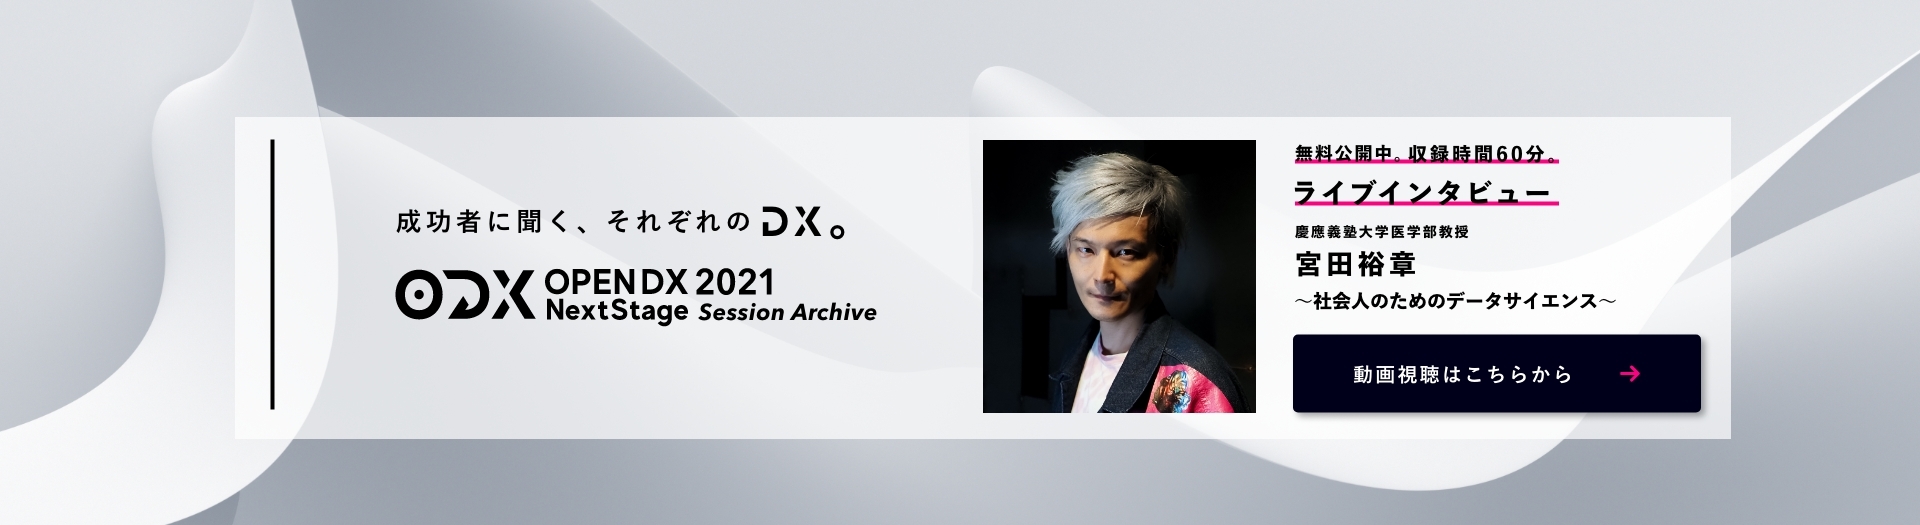 OPEN DX 2021 Nextstage アーカイブ配信中